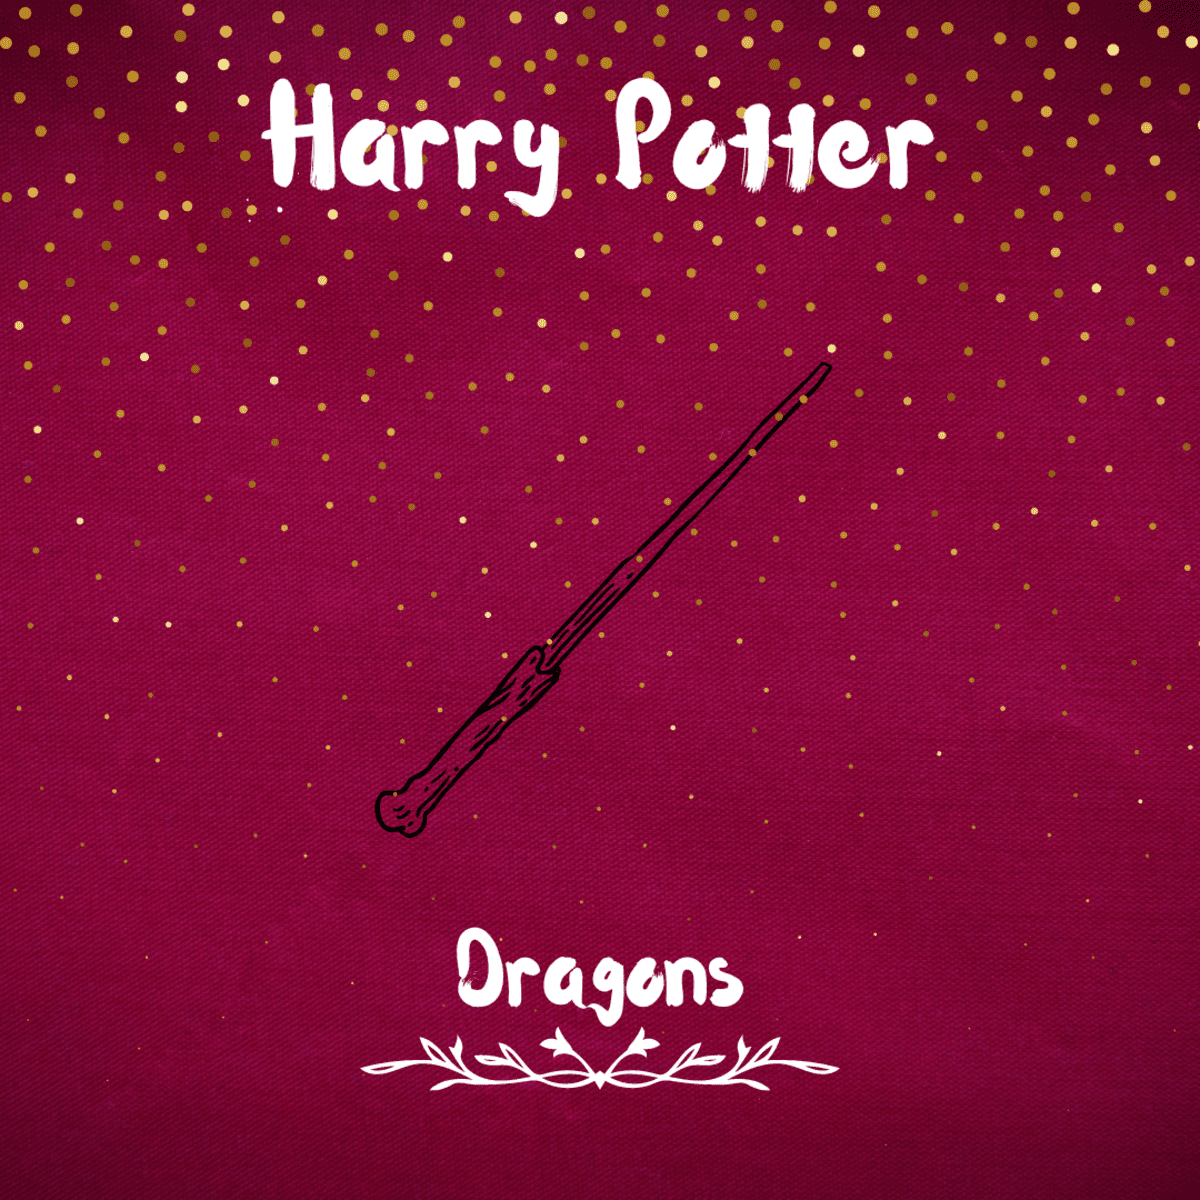 Top 10 Dragons in Harry Potter - HobbyLark